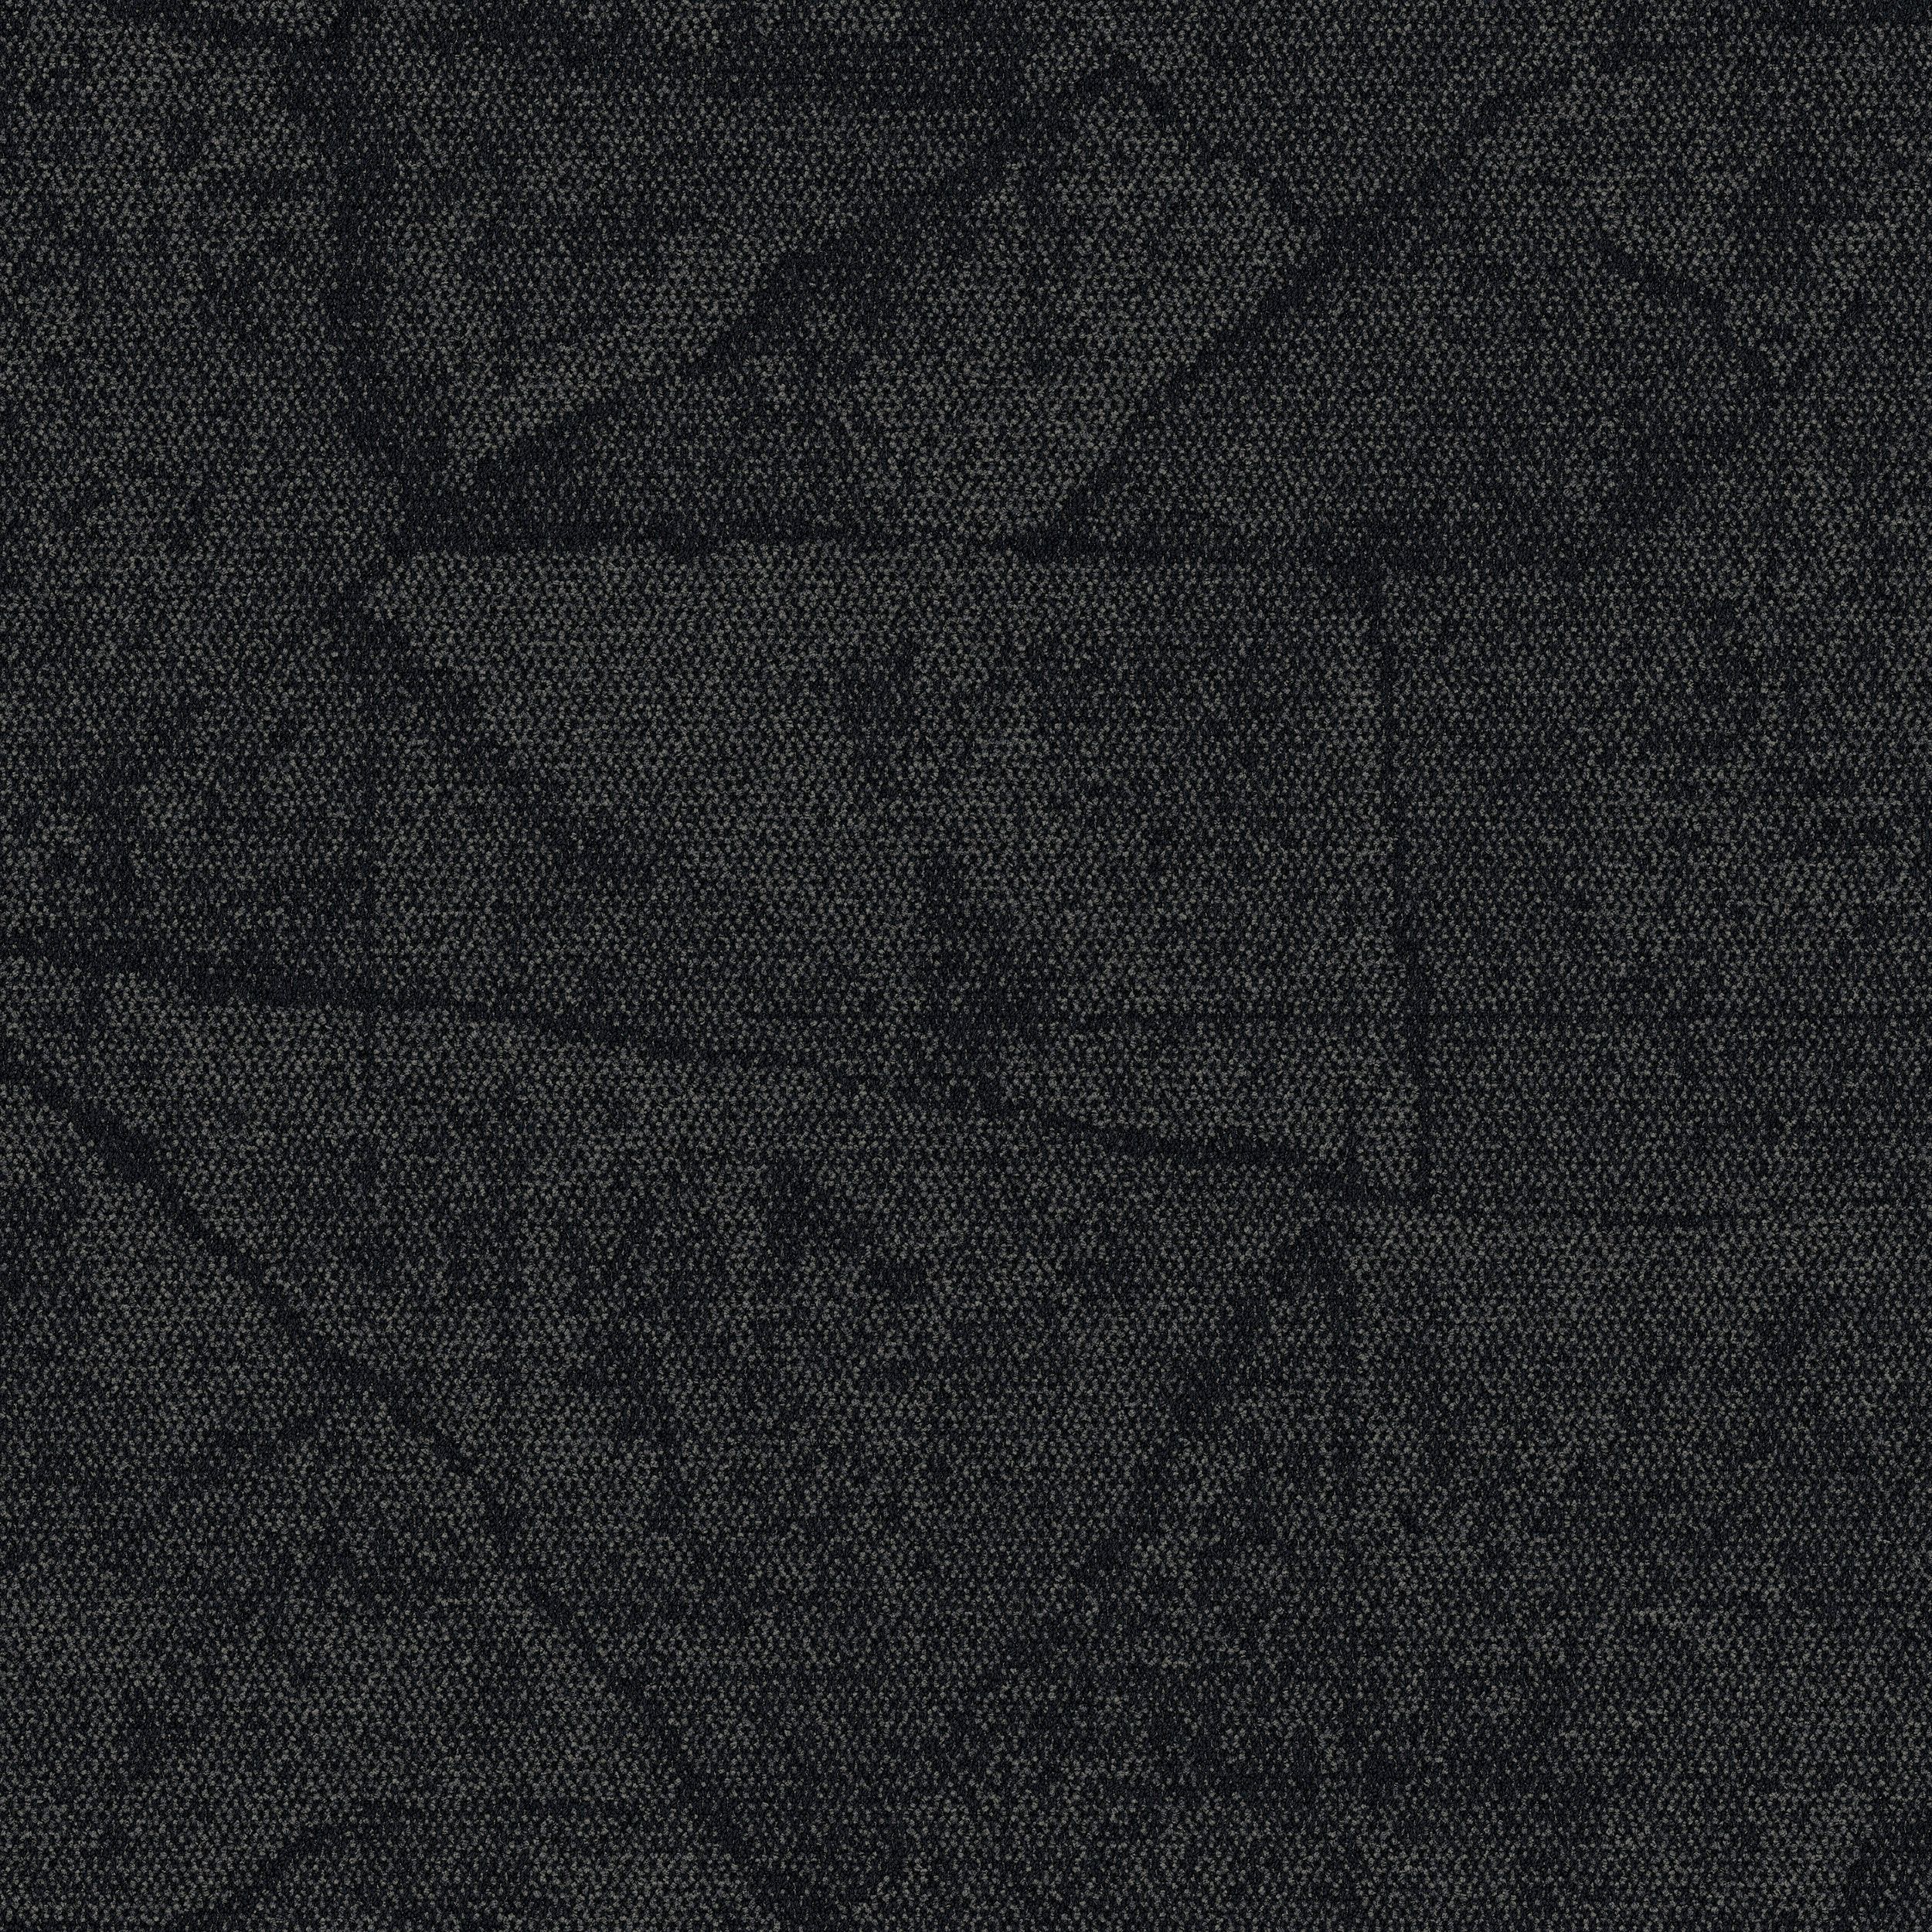 Cap Rock Carpet Tile in Ebony image number 2